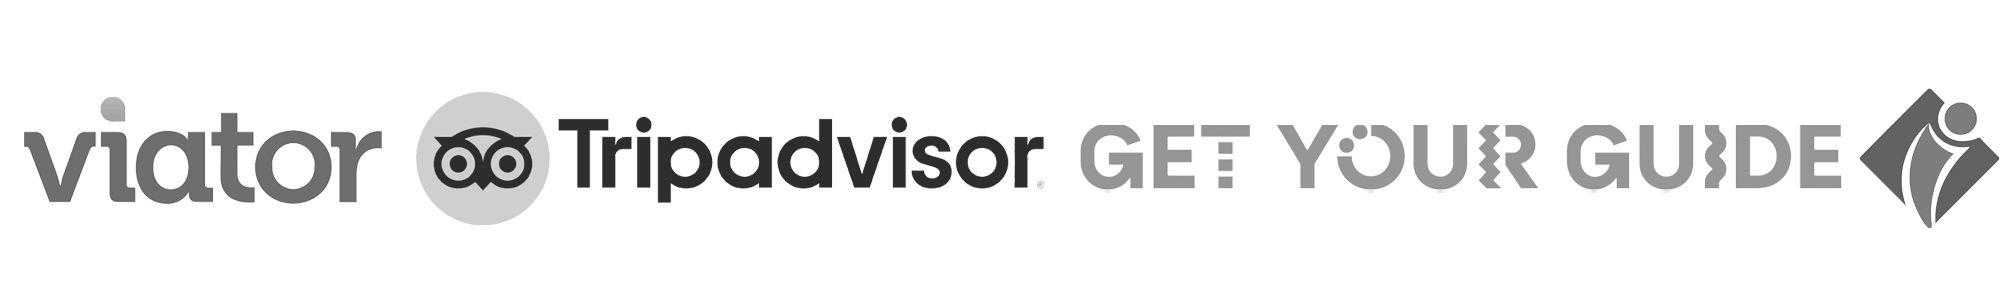 Viator Tripadvisor logos GetYourGuide